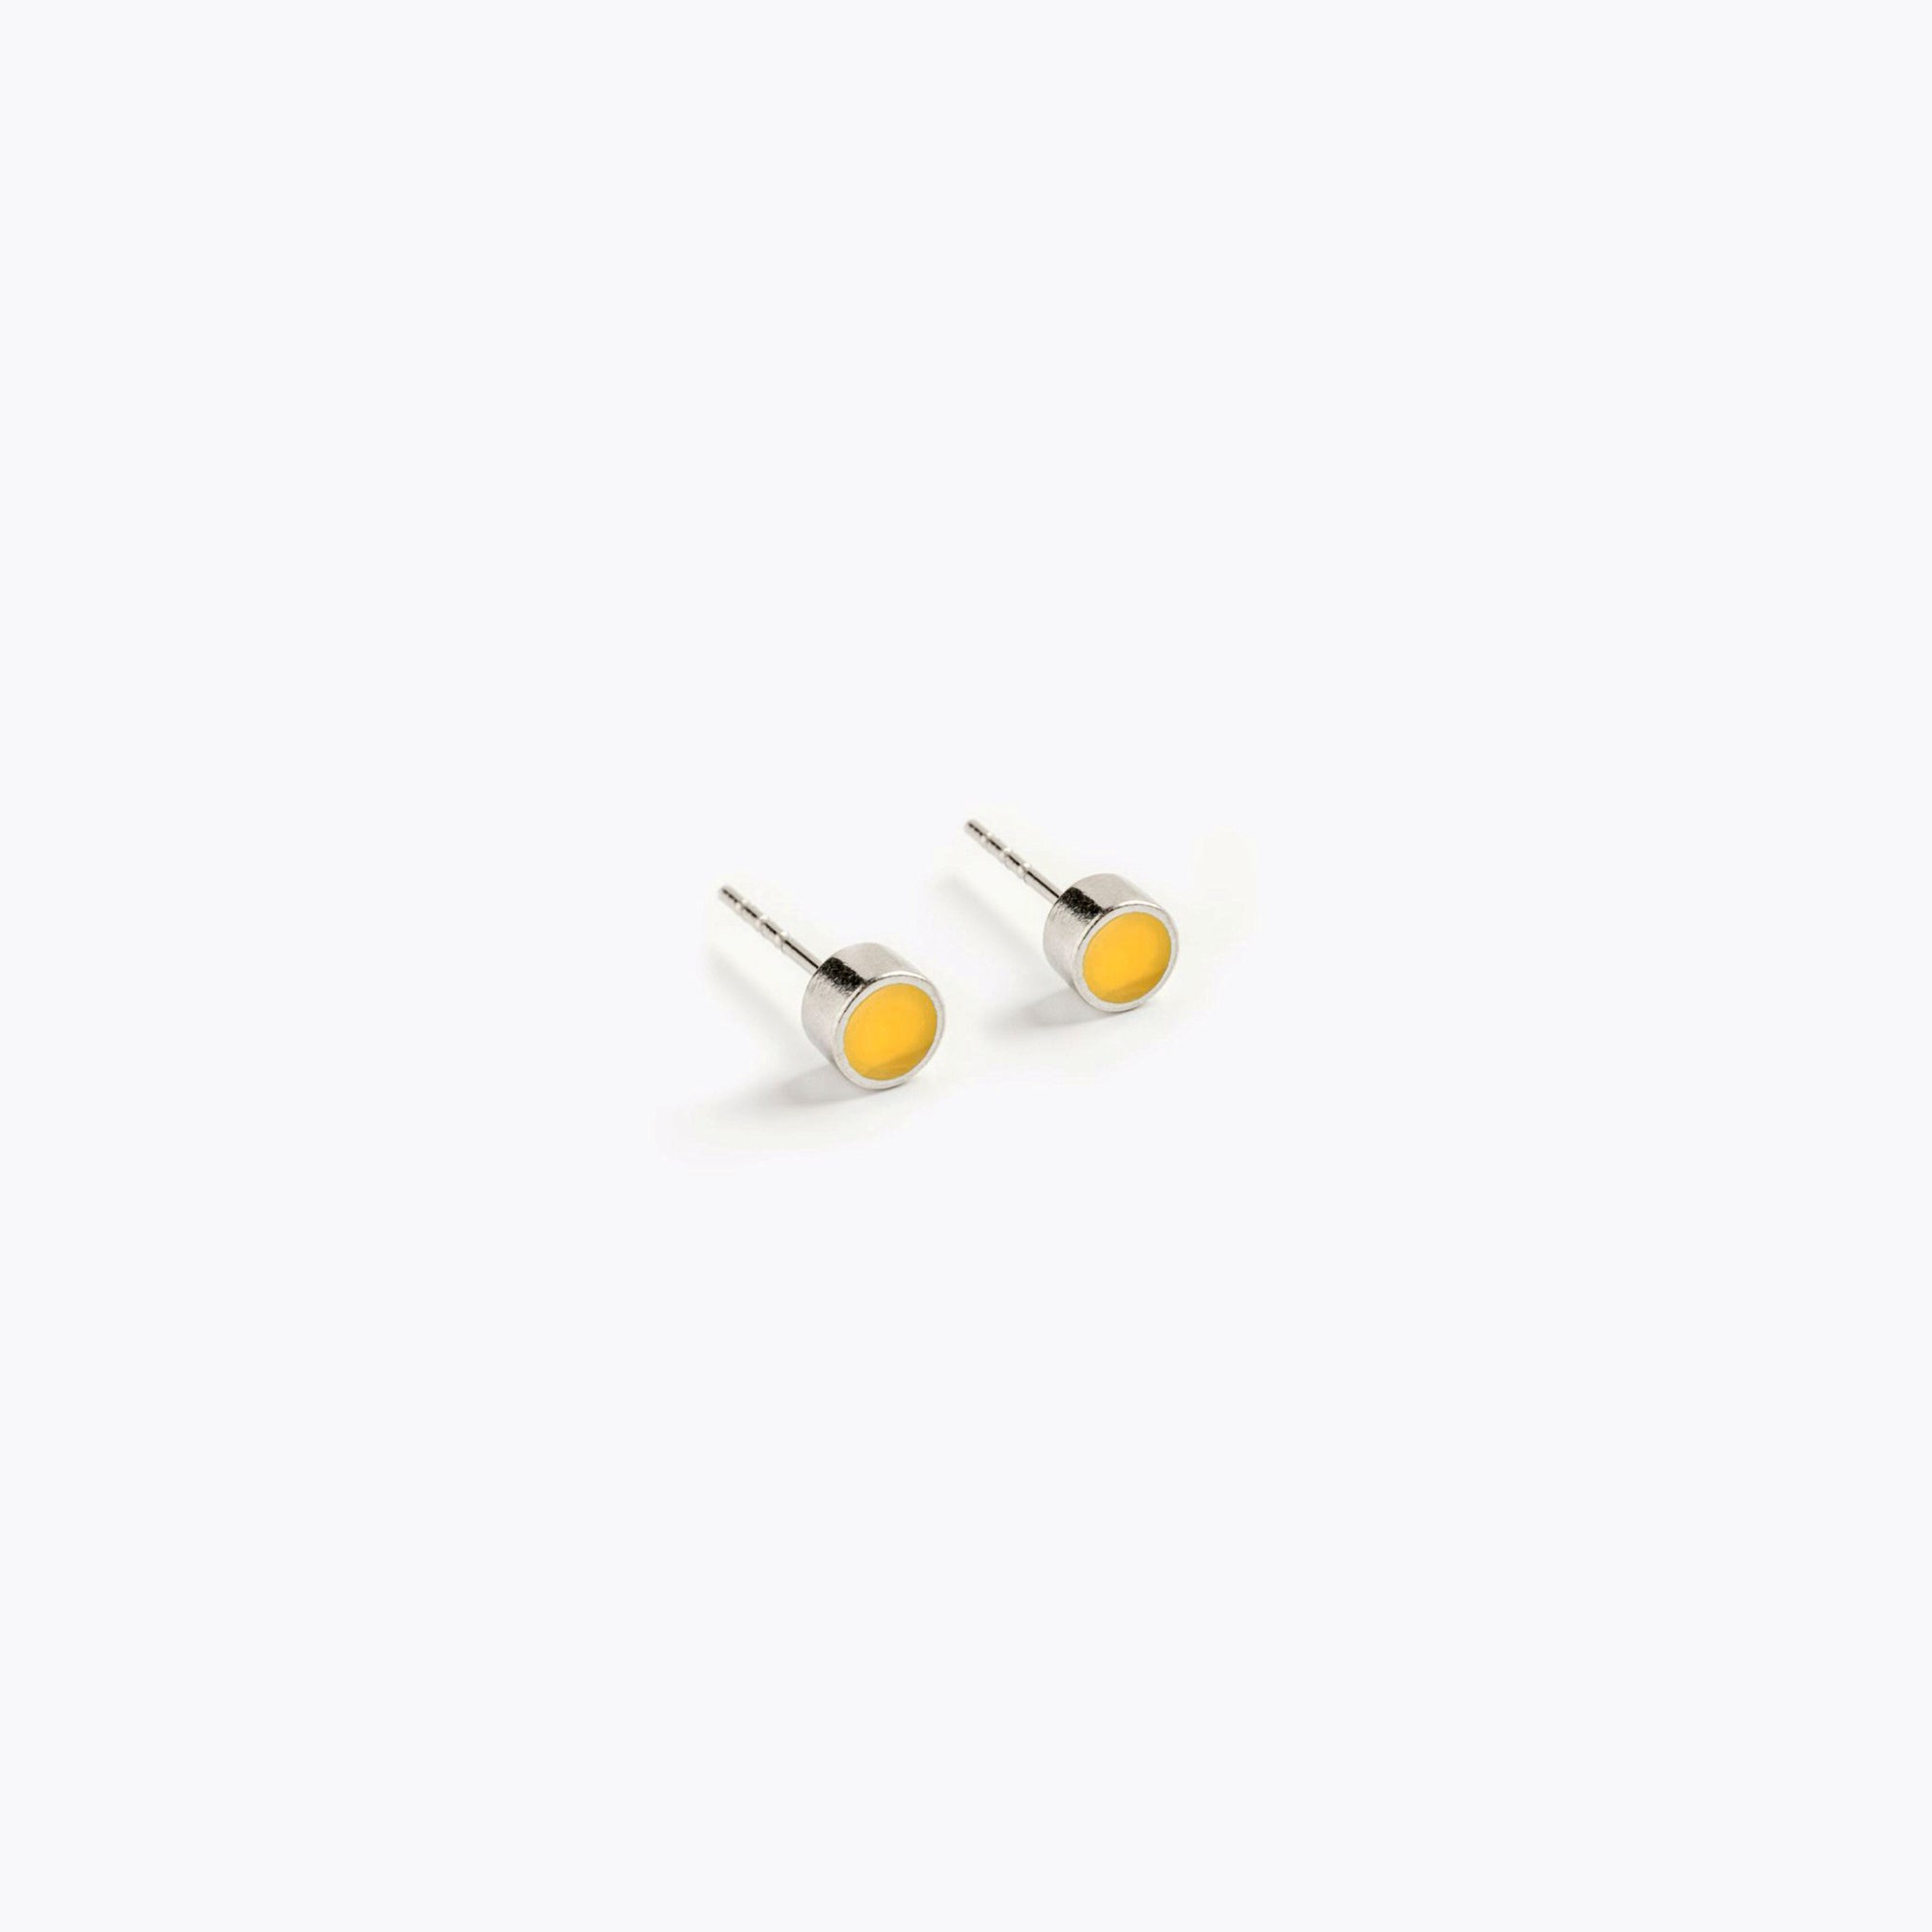 A simple pair of small, yellow, circular stud earrings.